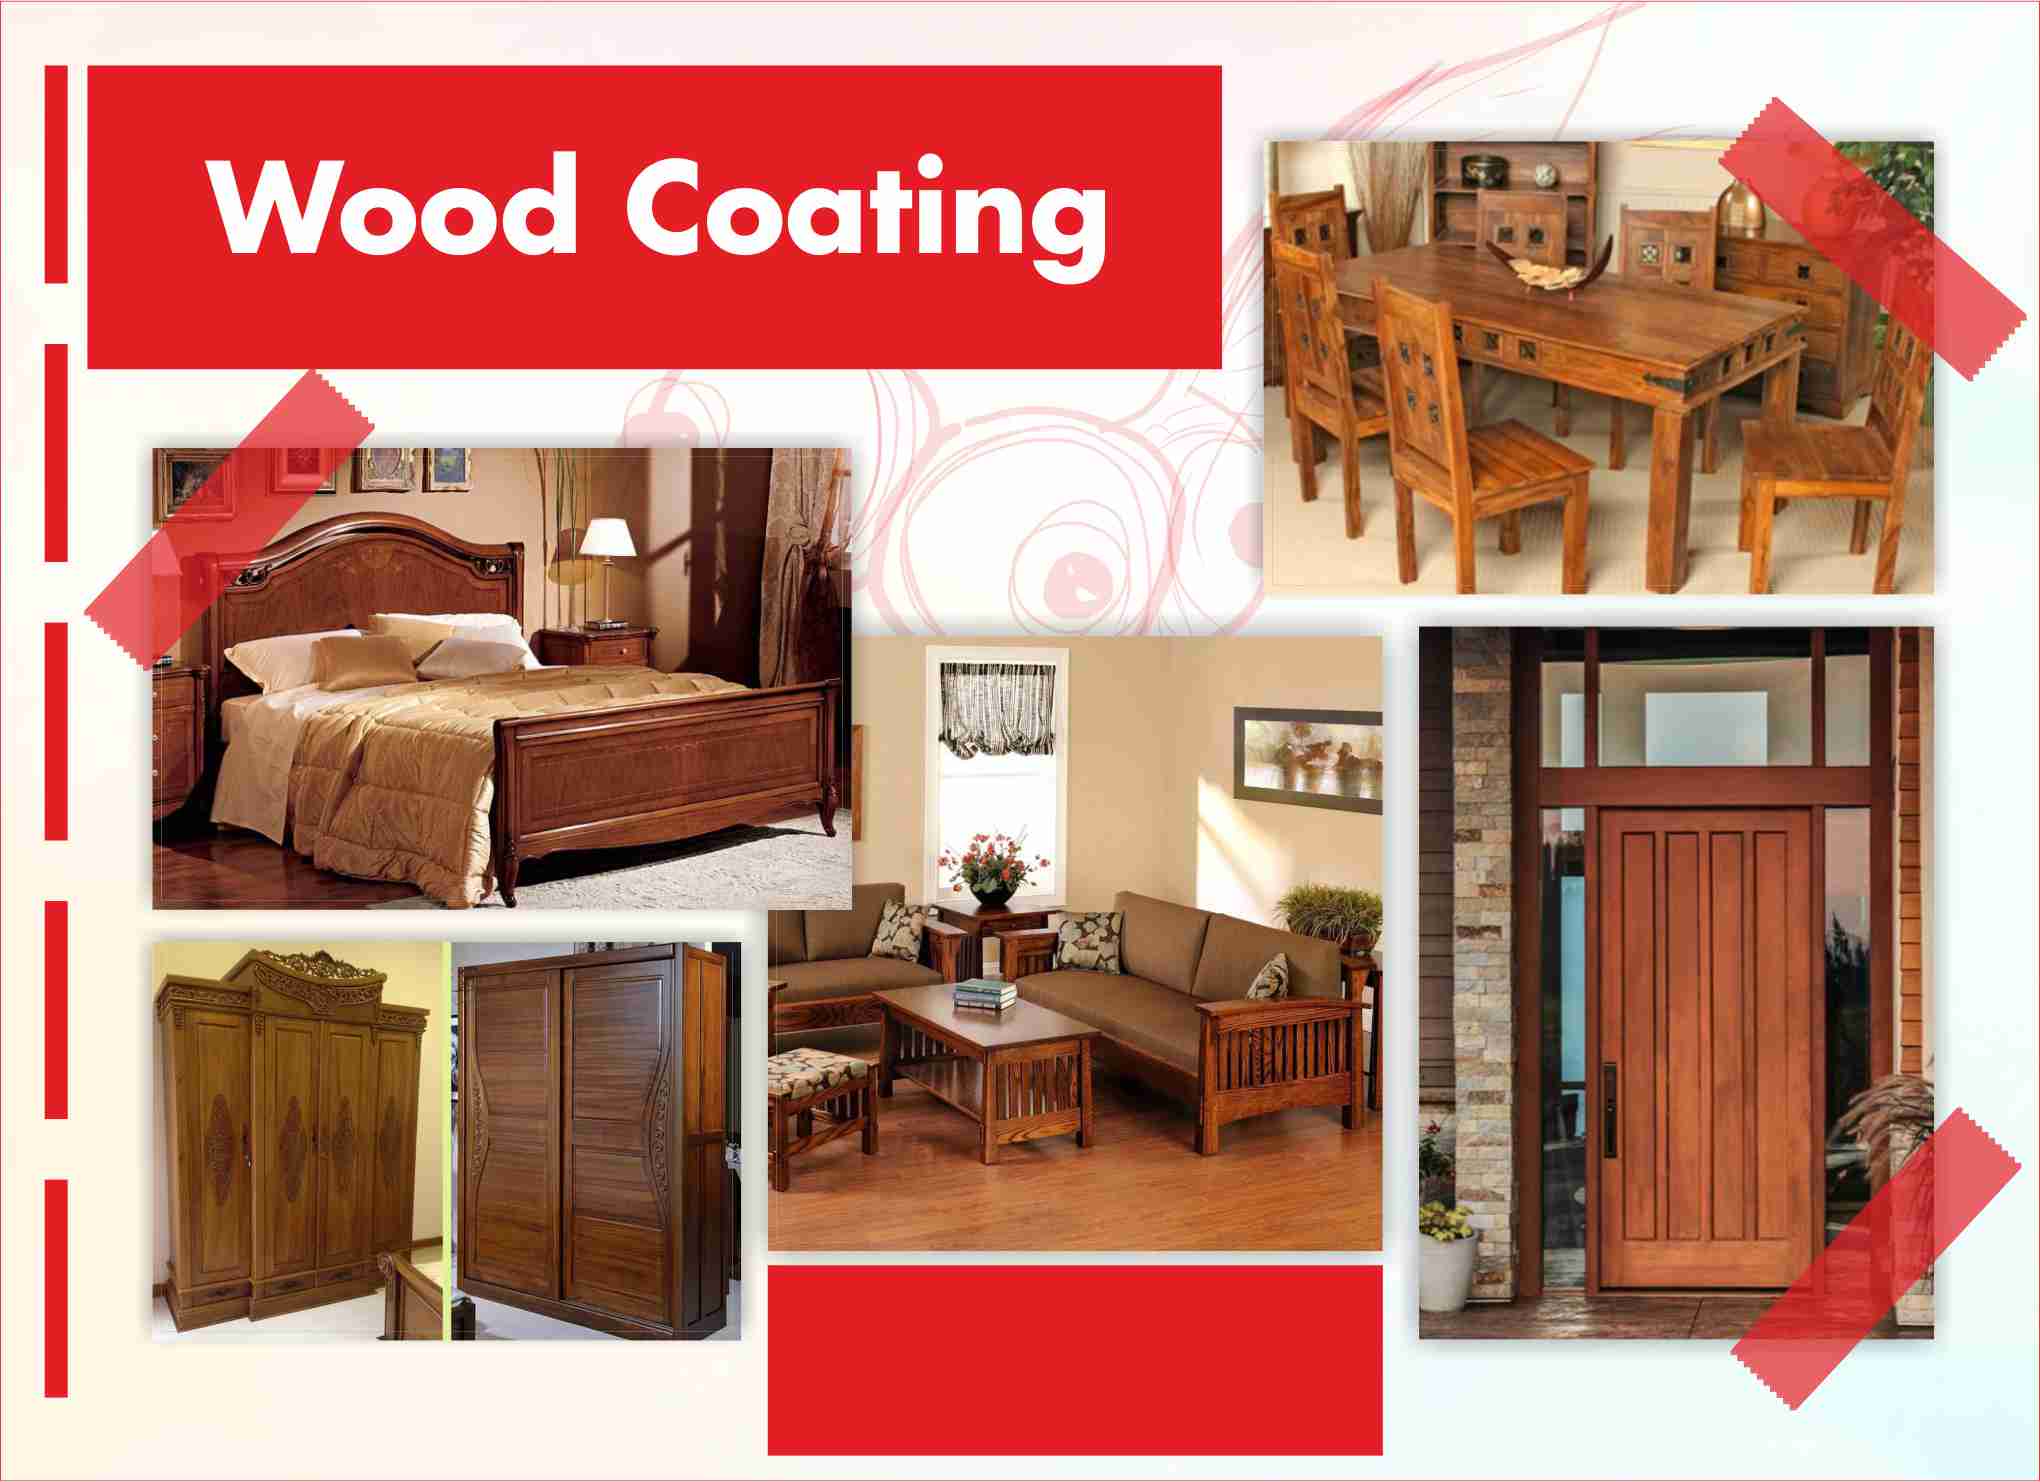 Wood Coating